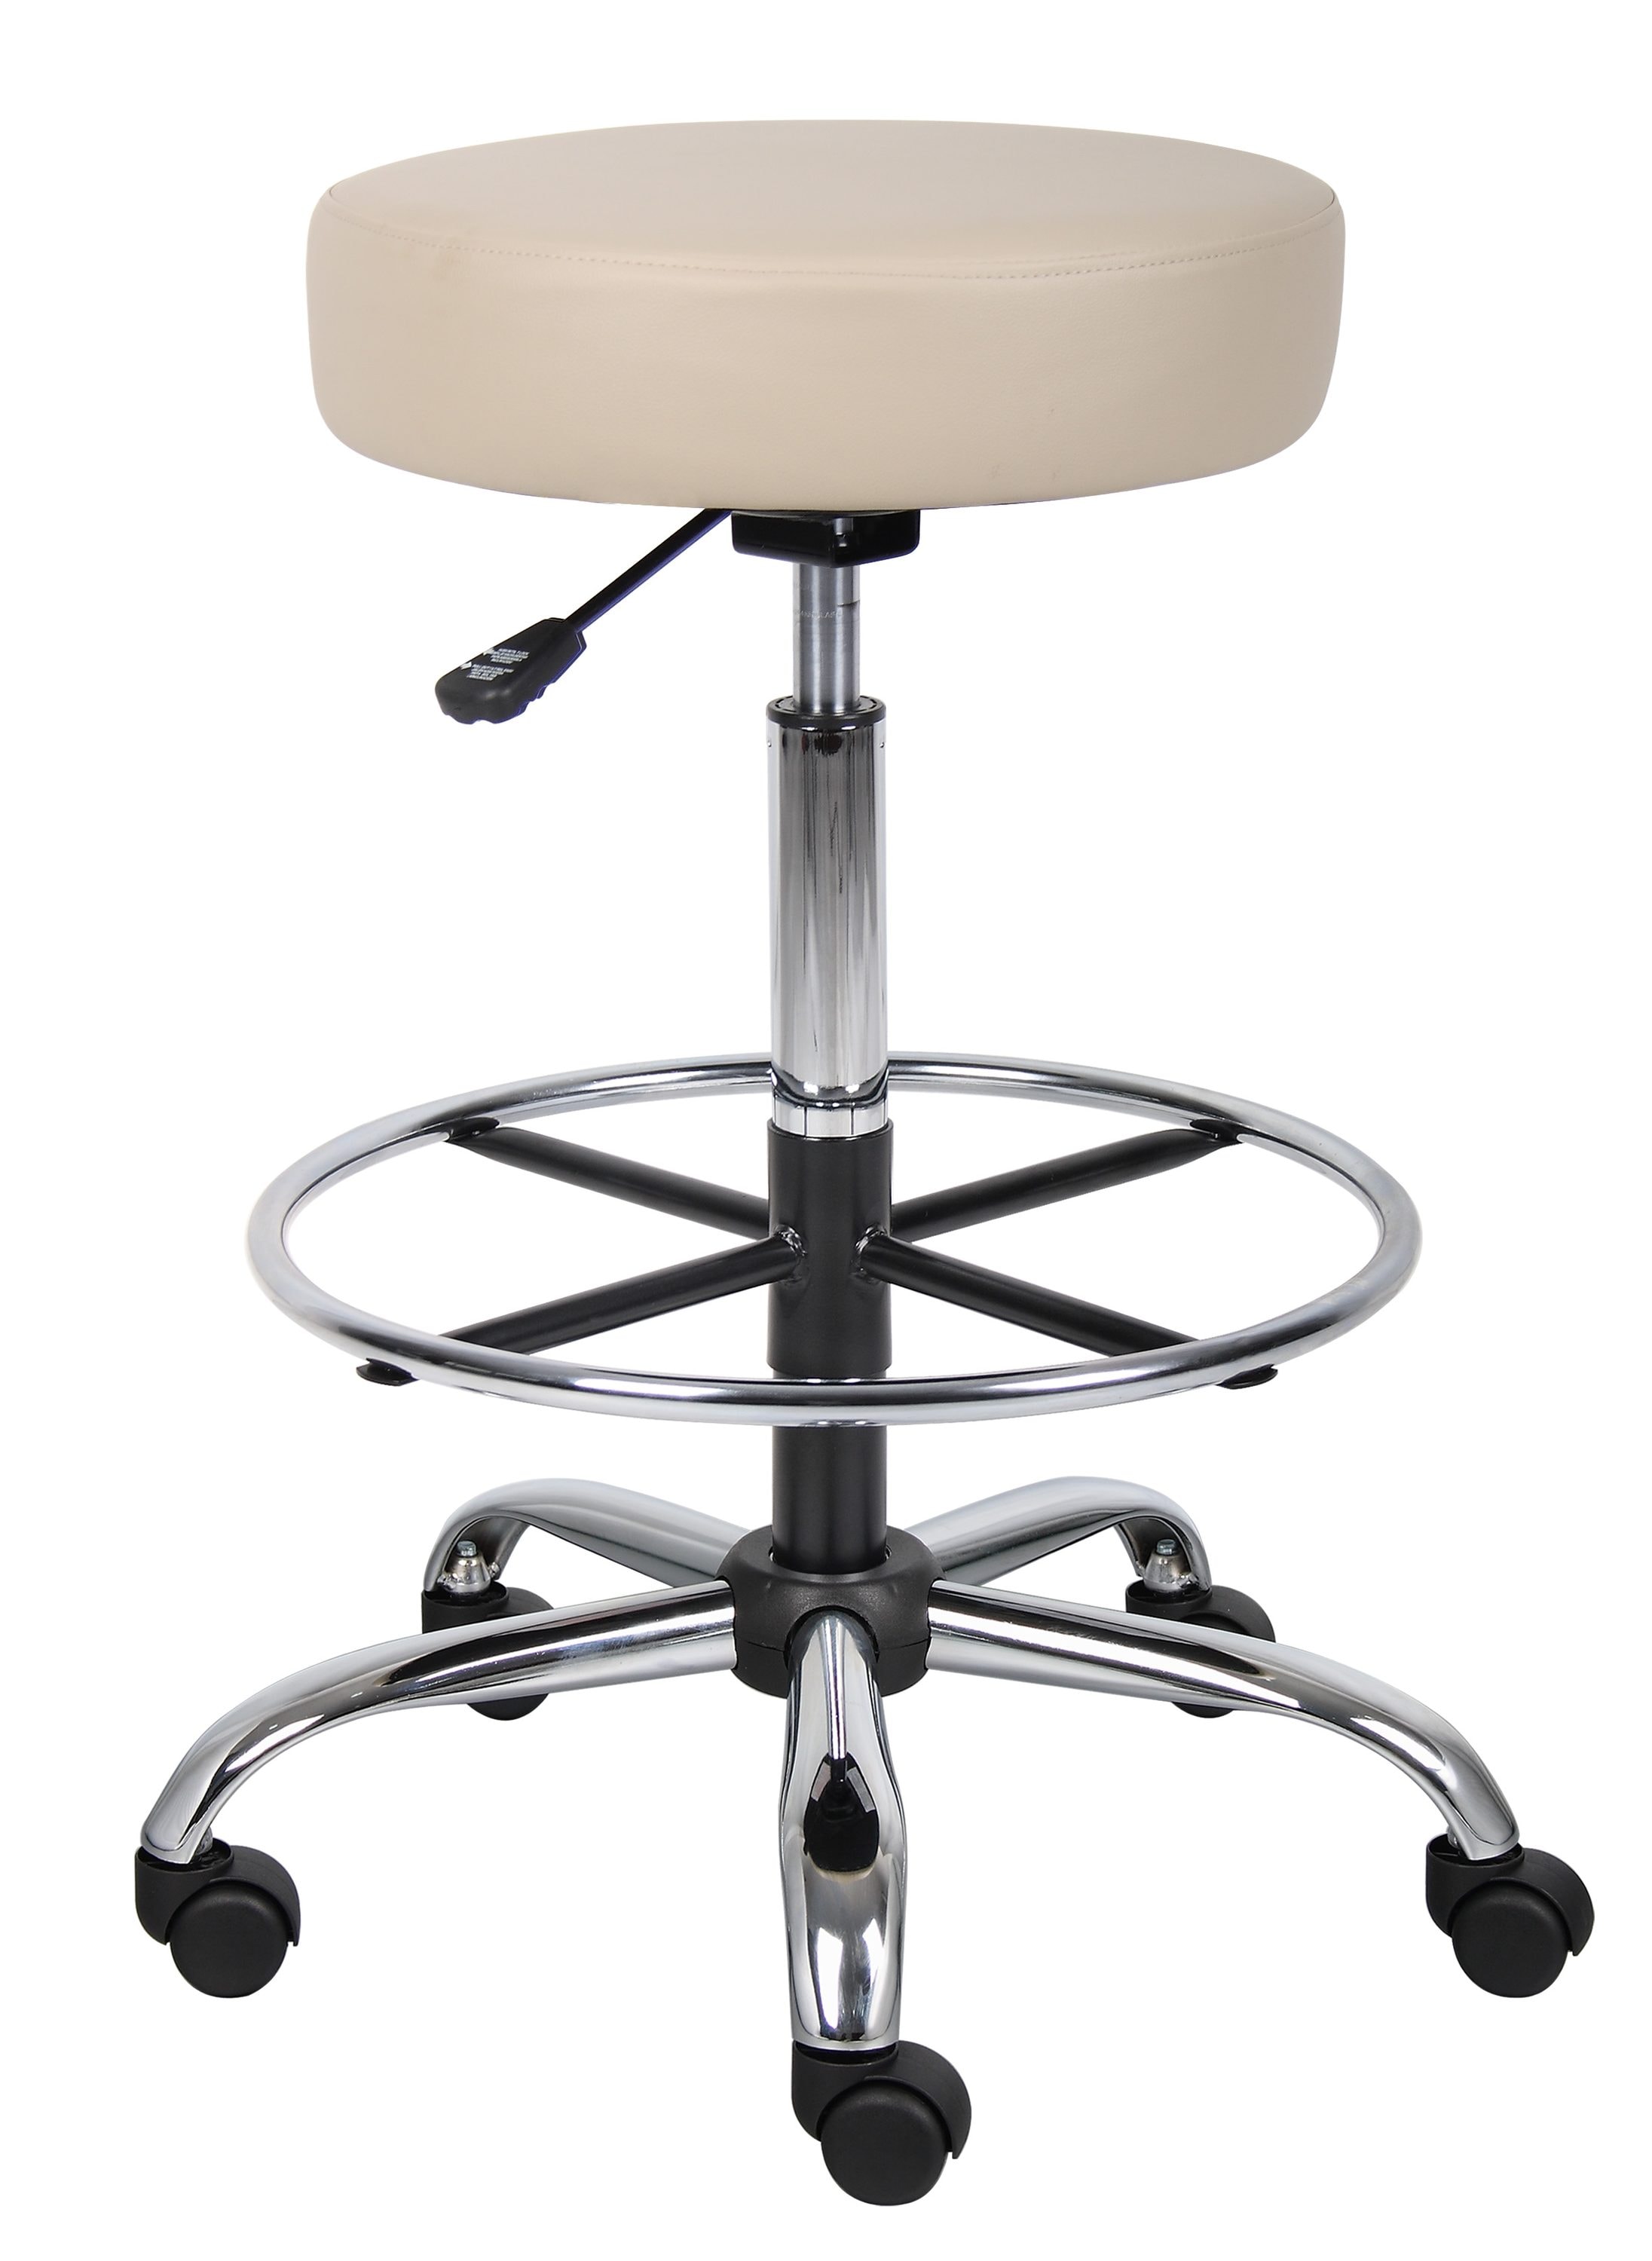 Rolling stool Bar stool Drafting Stool With Wheel Height Adjustable Swivel Beige 